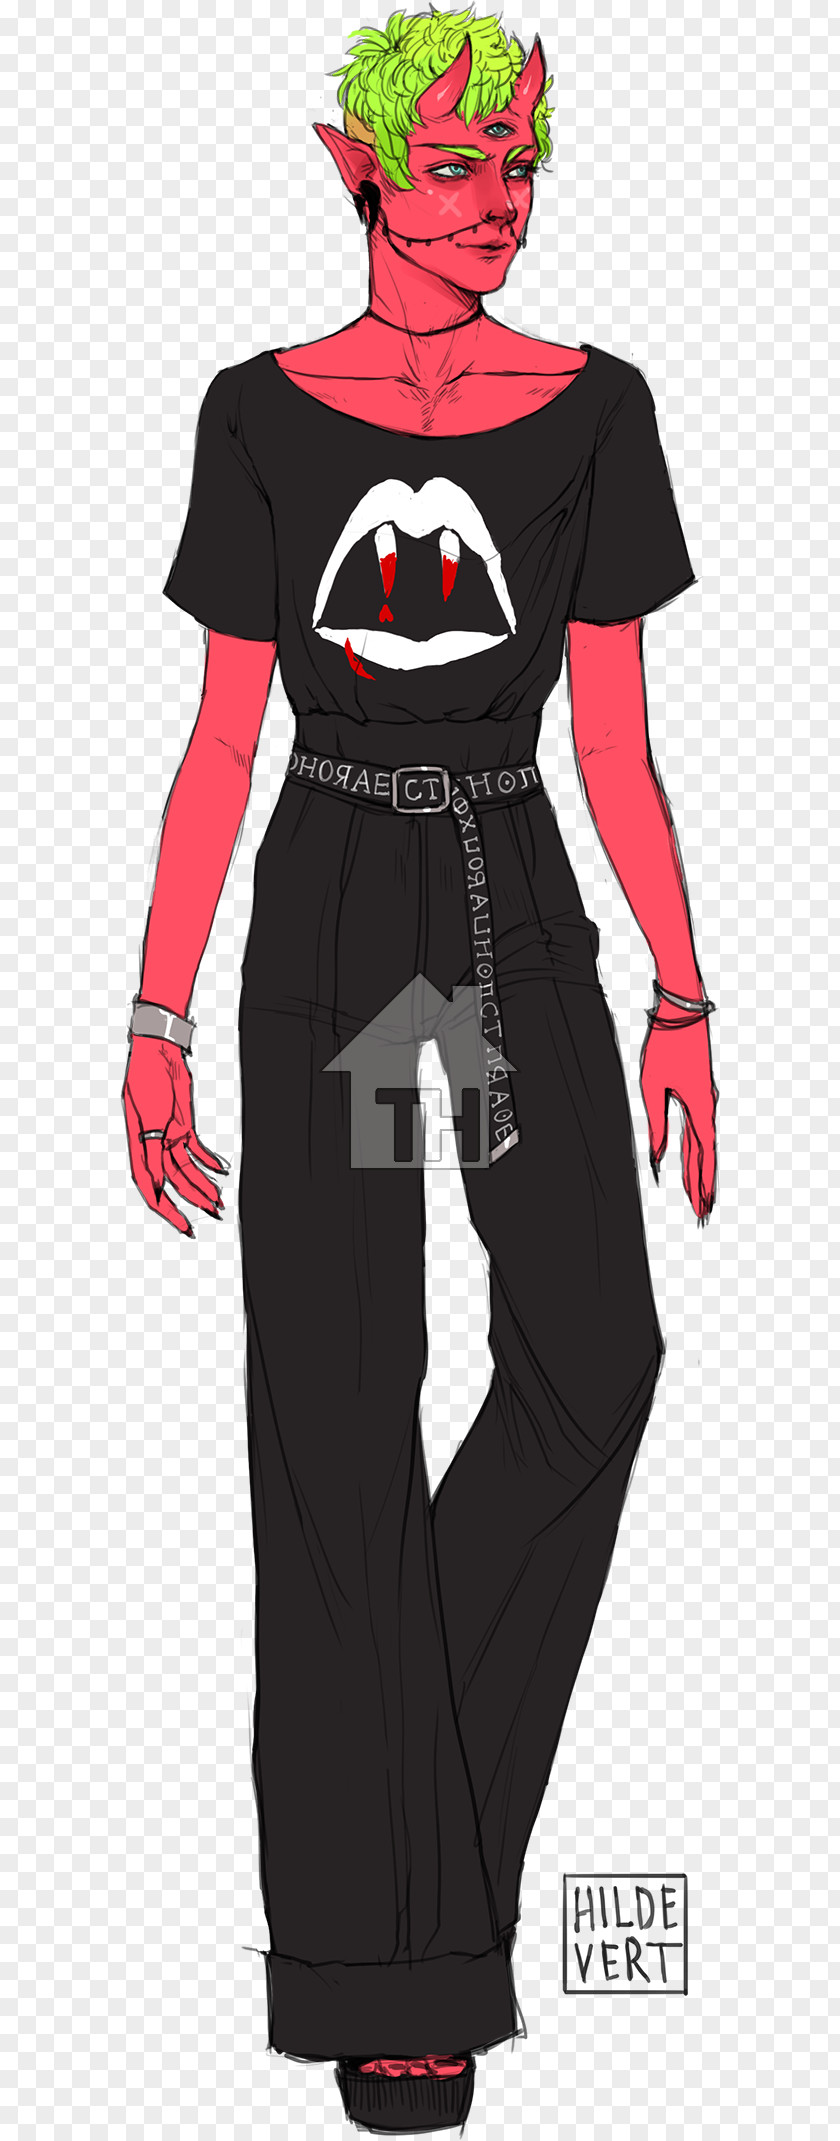 Lorde Costume Design Illustration Supervillain Animated Cartoon PNG